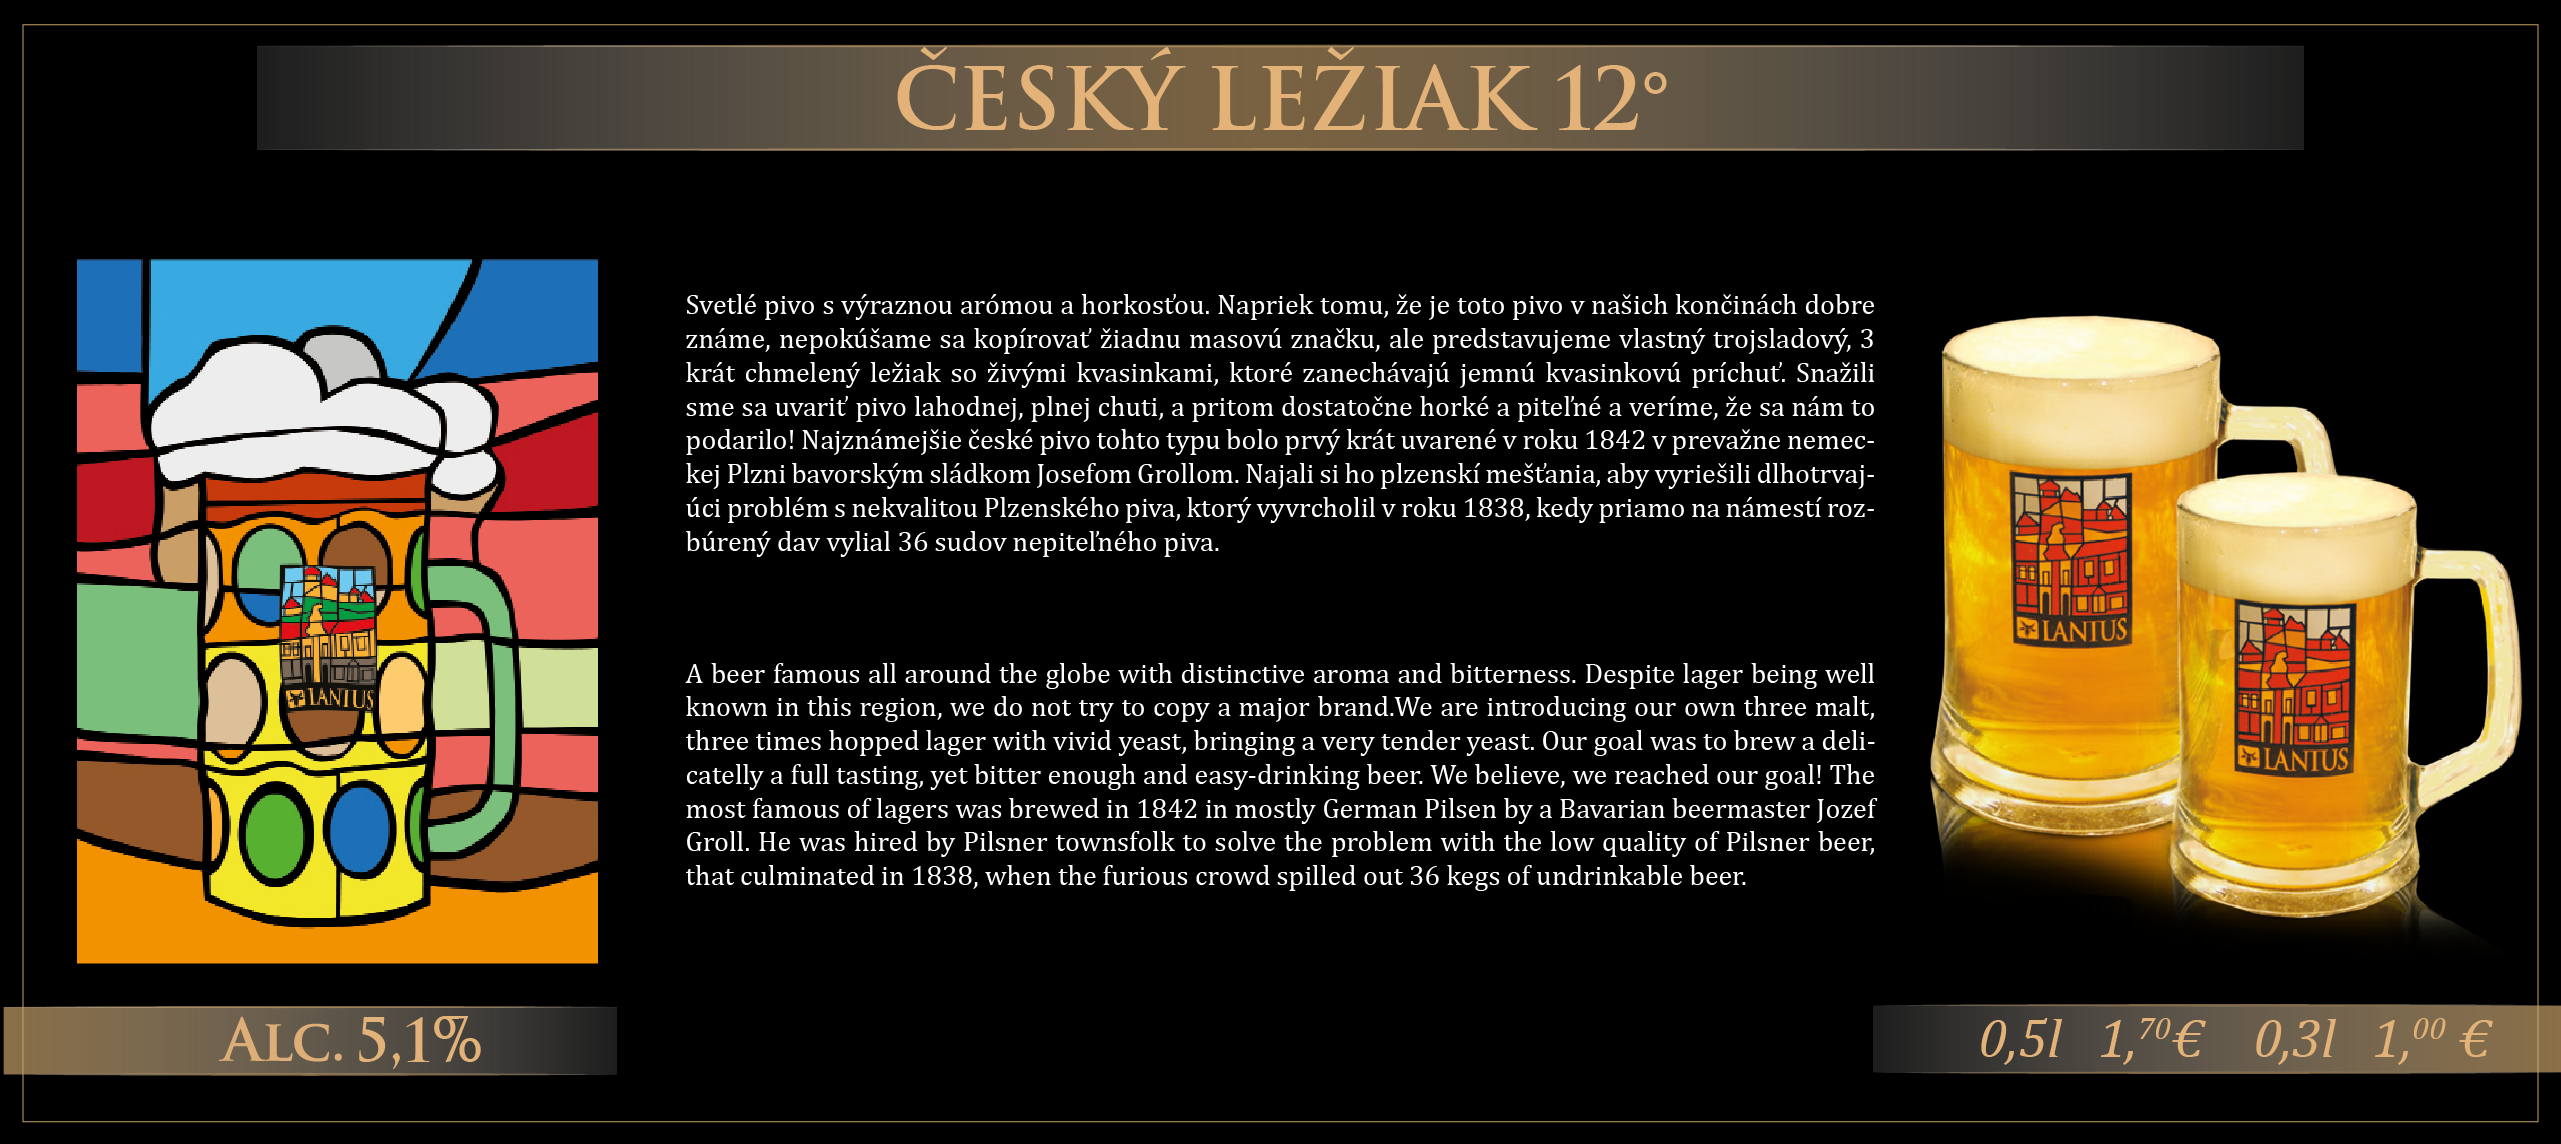 bohemian_cesky_leziak_web-05